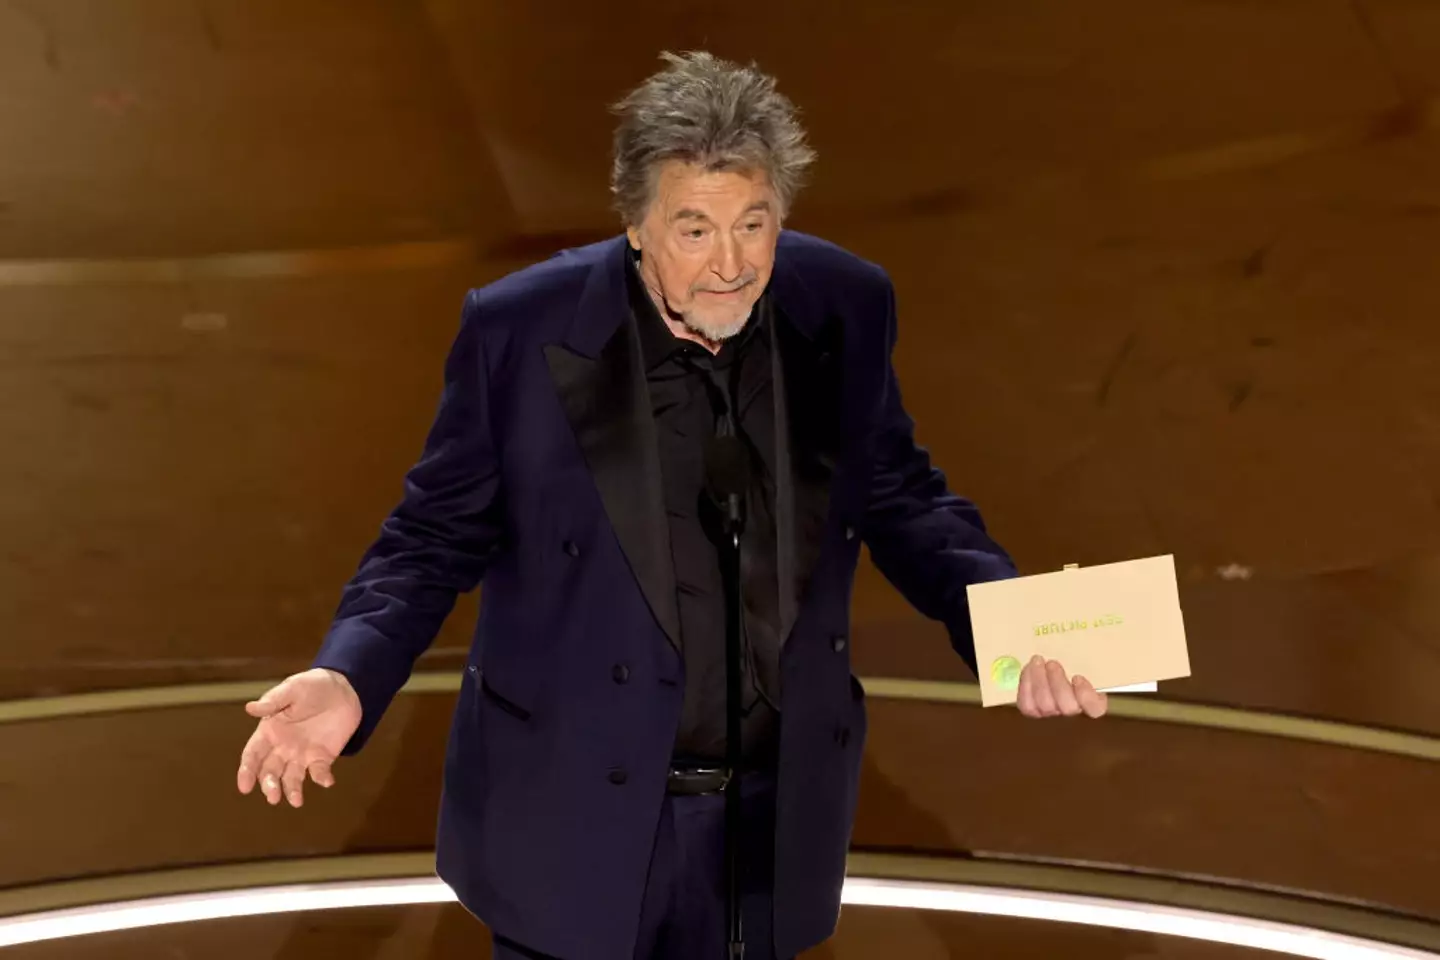 Al Pacino presented the award in a unique manner.